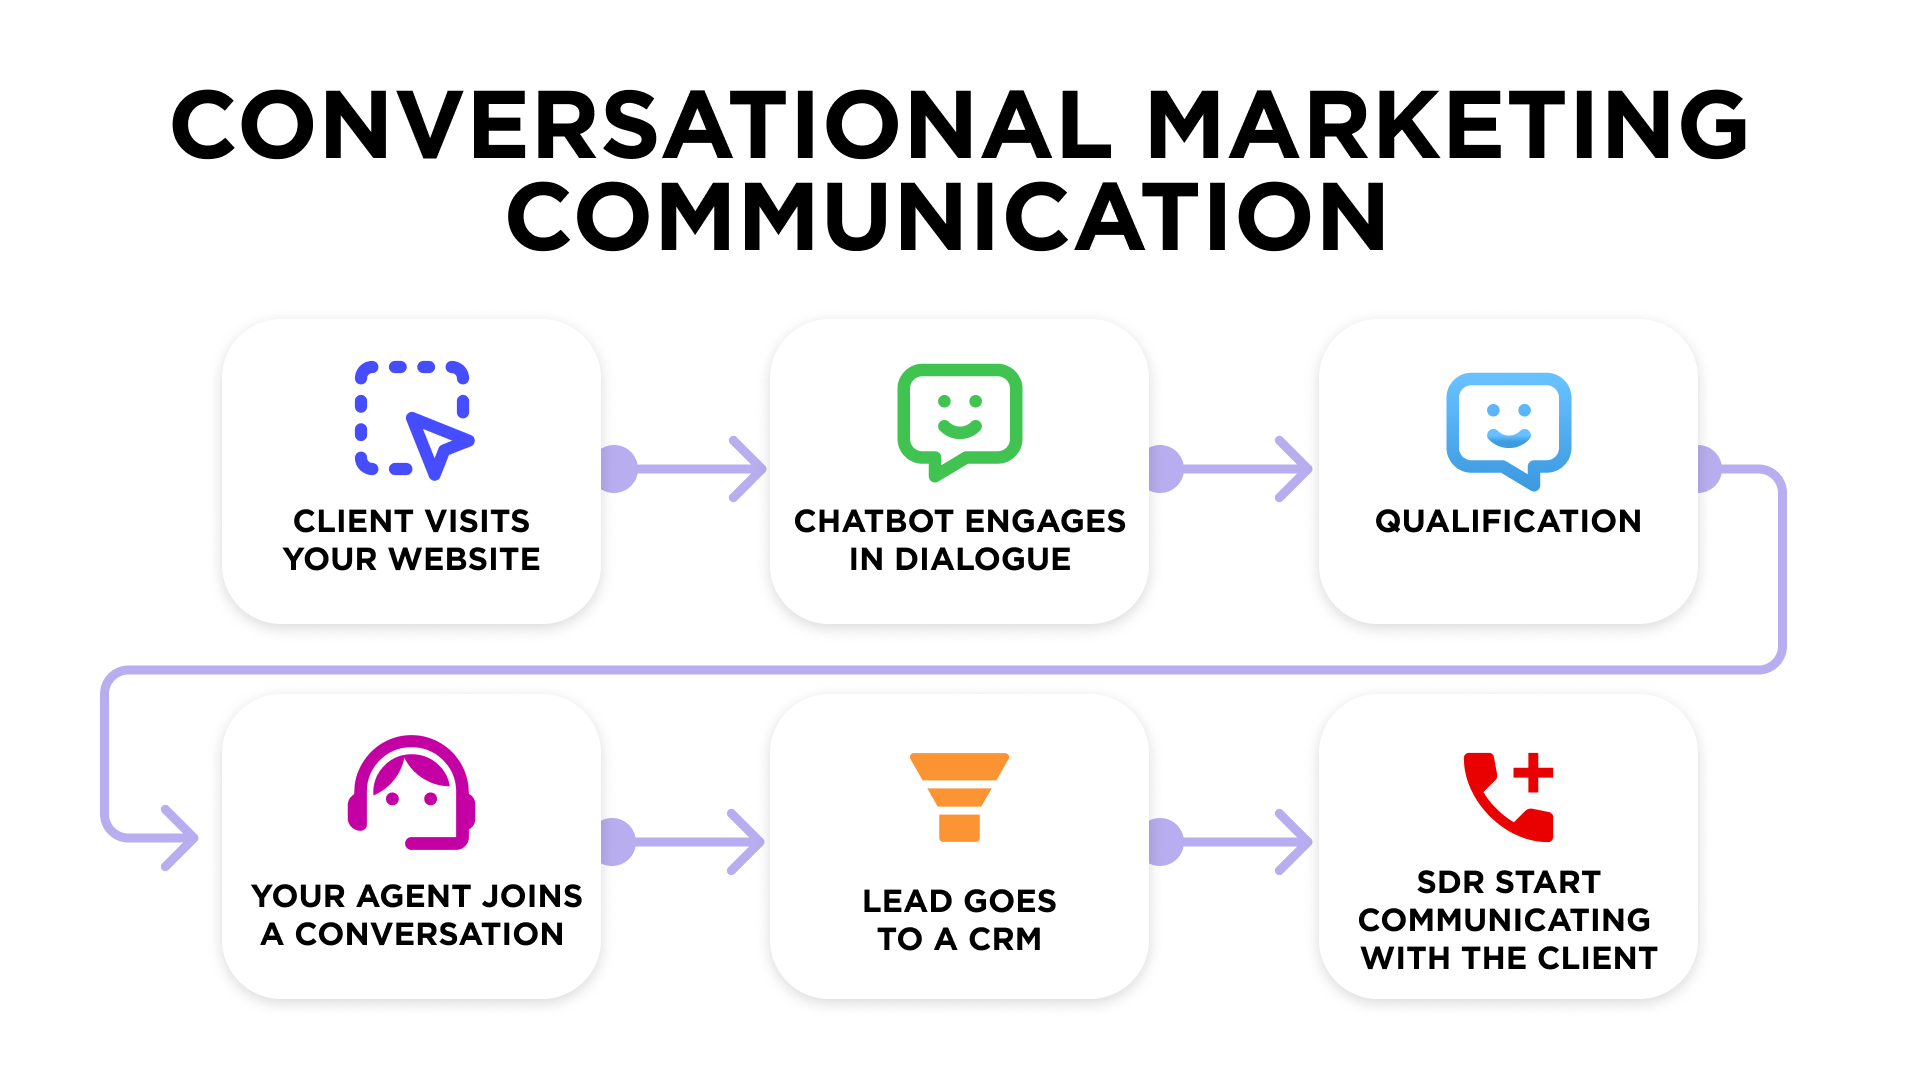 Conversational marketing communication